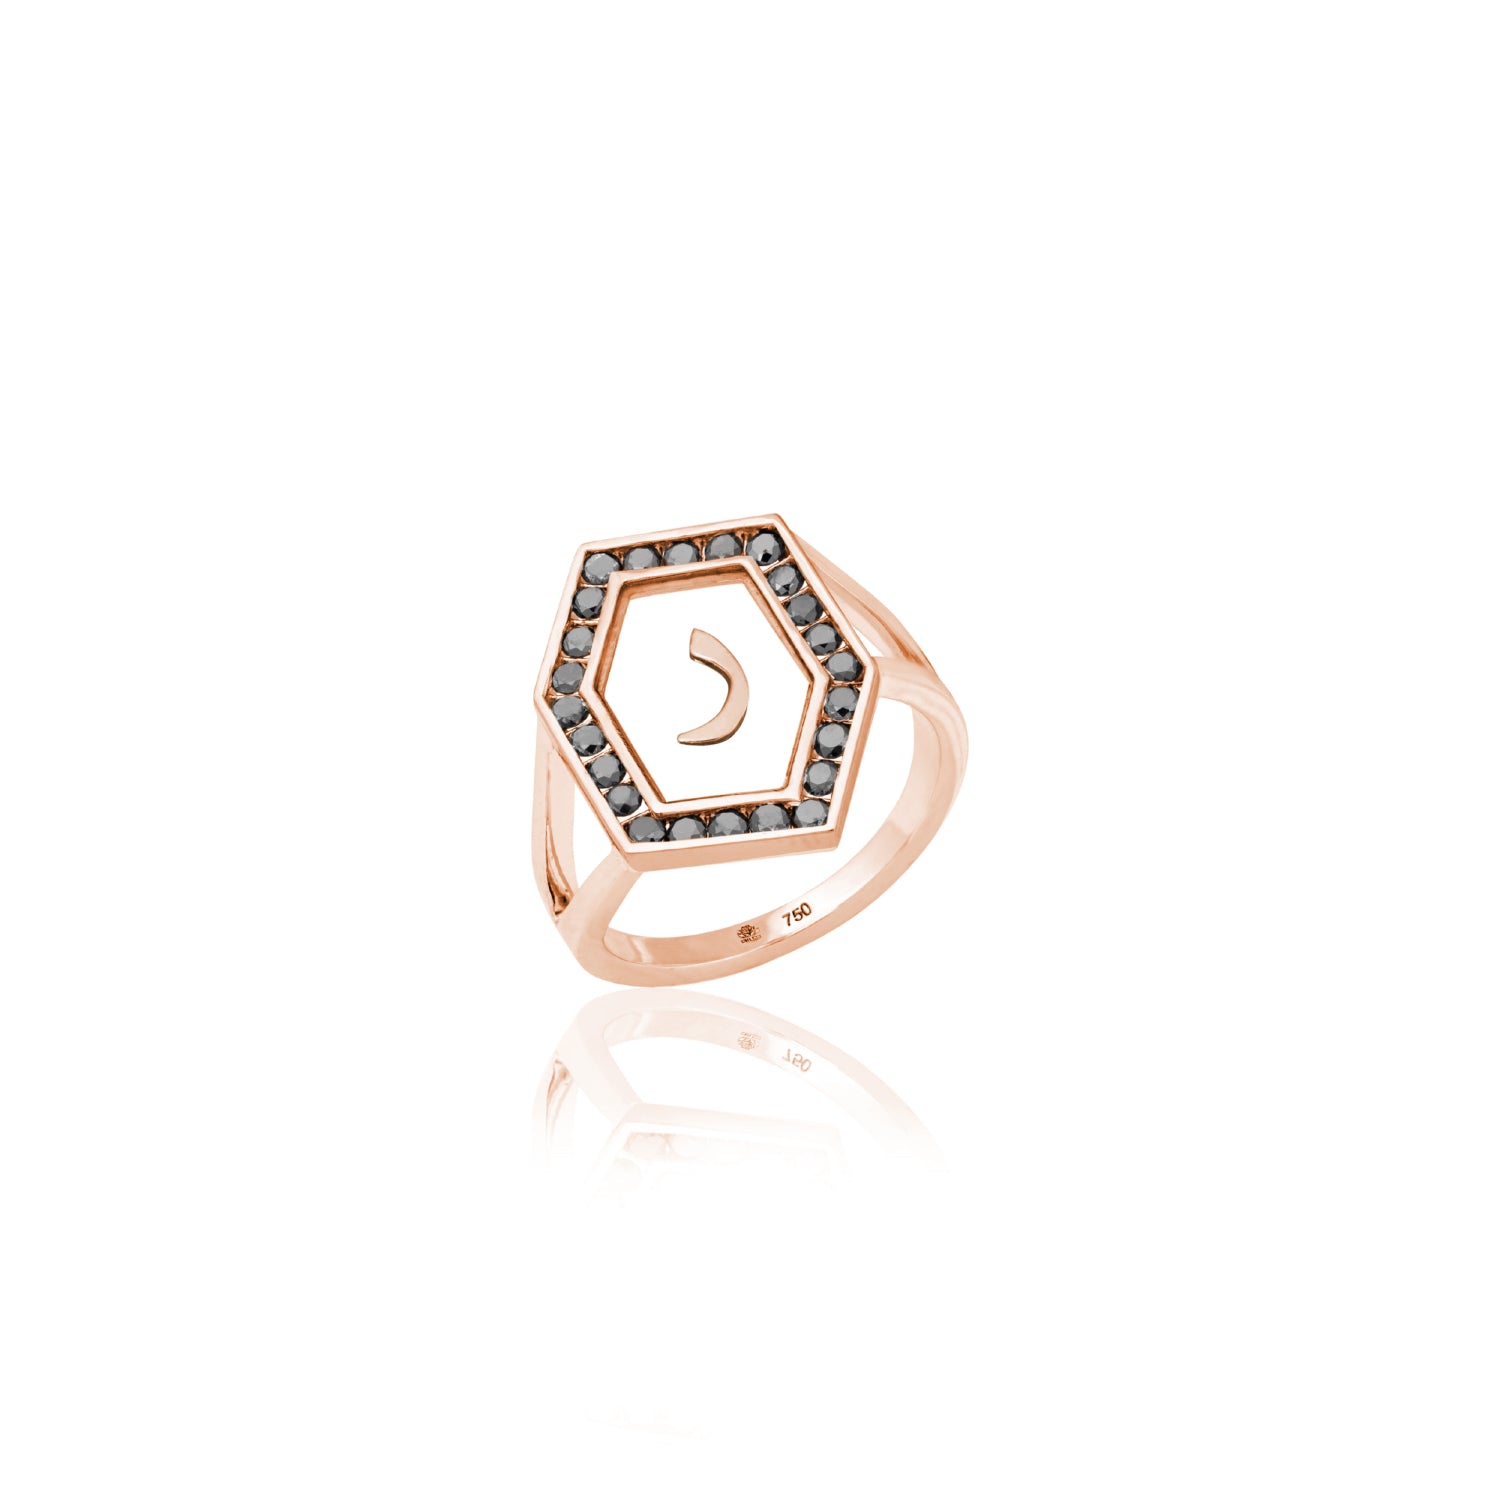 Qamoos 1.0 Letter ر Black Diamond Ring in Rose Gold